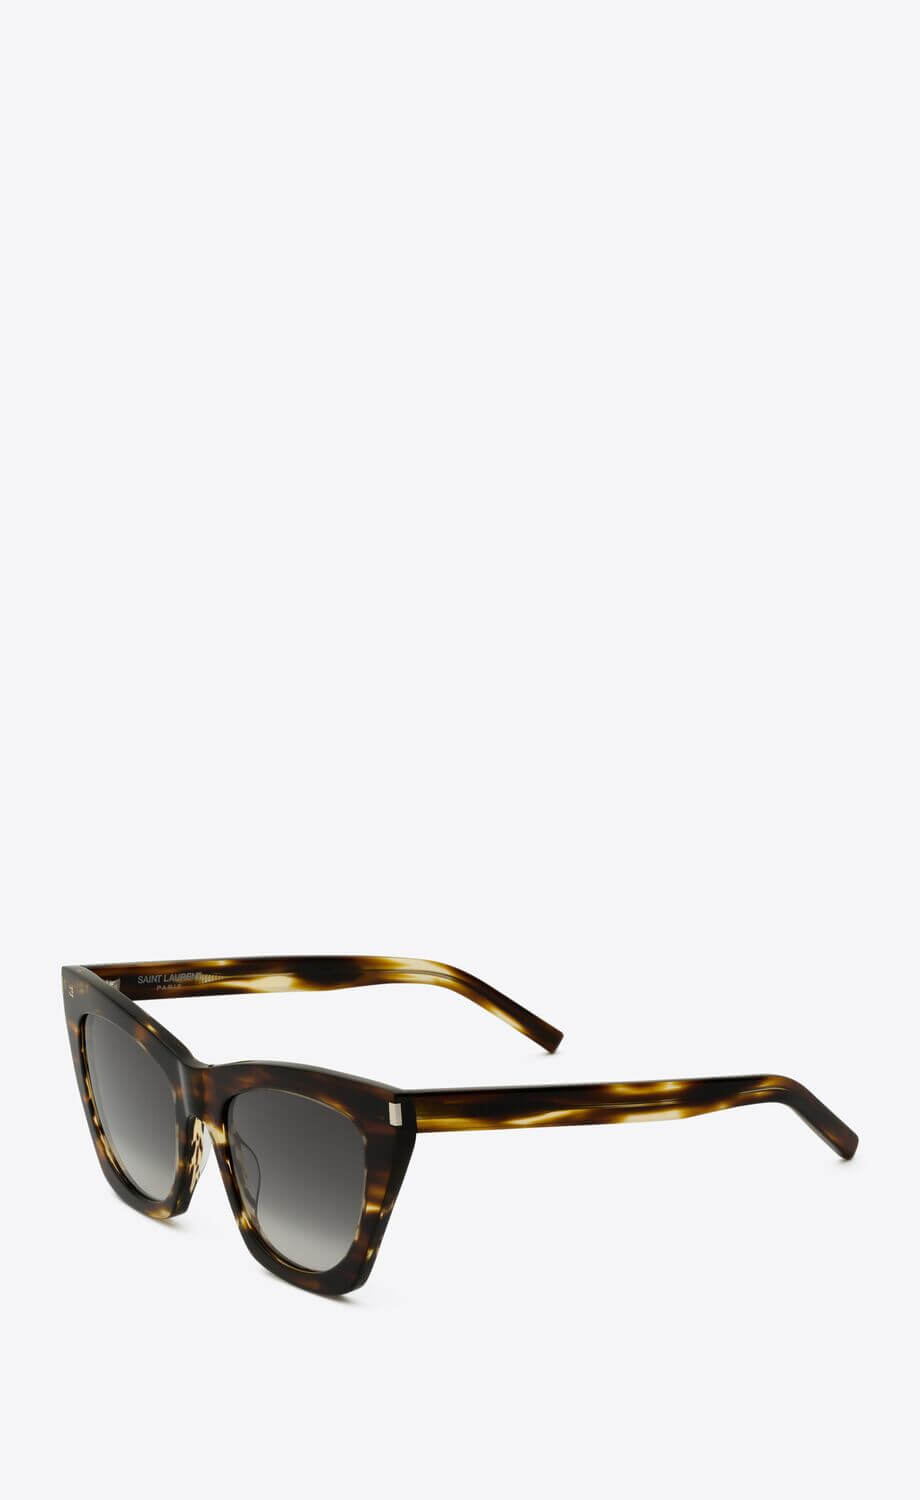 Saint Laurent Kate Sunglasses in Tortoise available at The New Trend Australia.